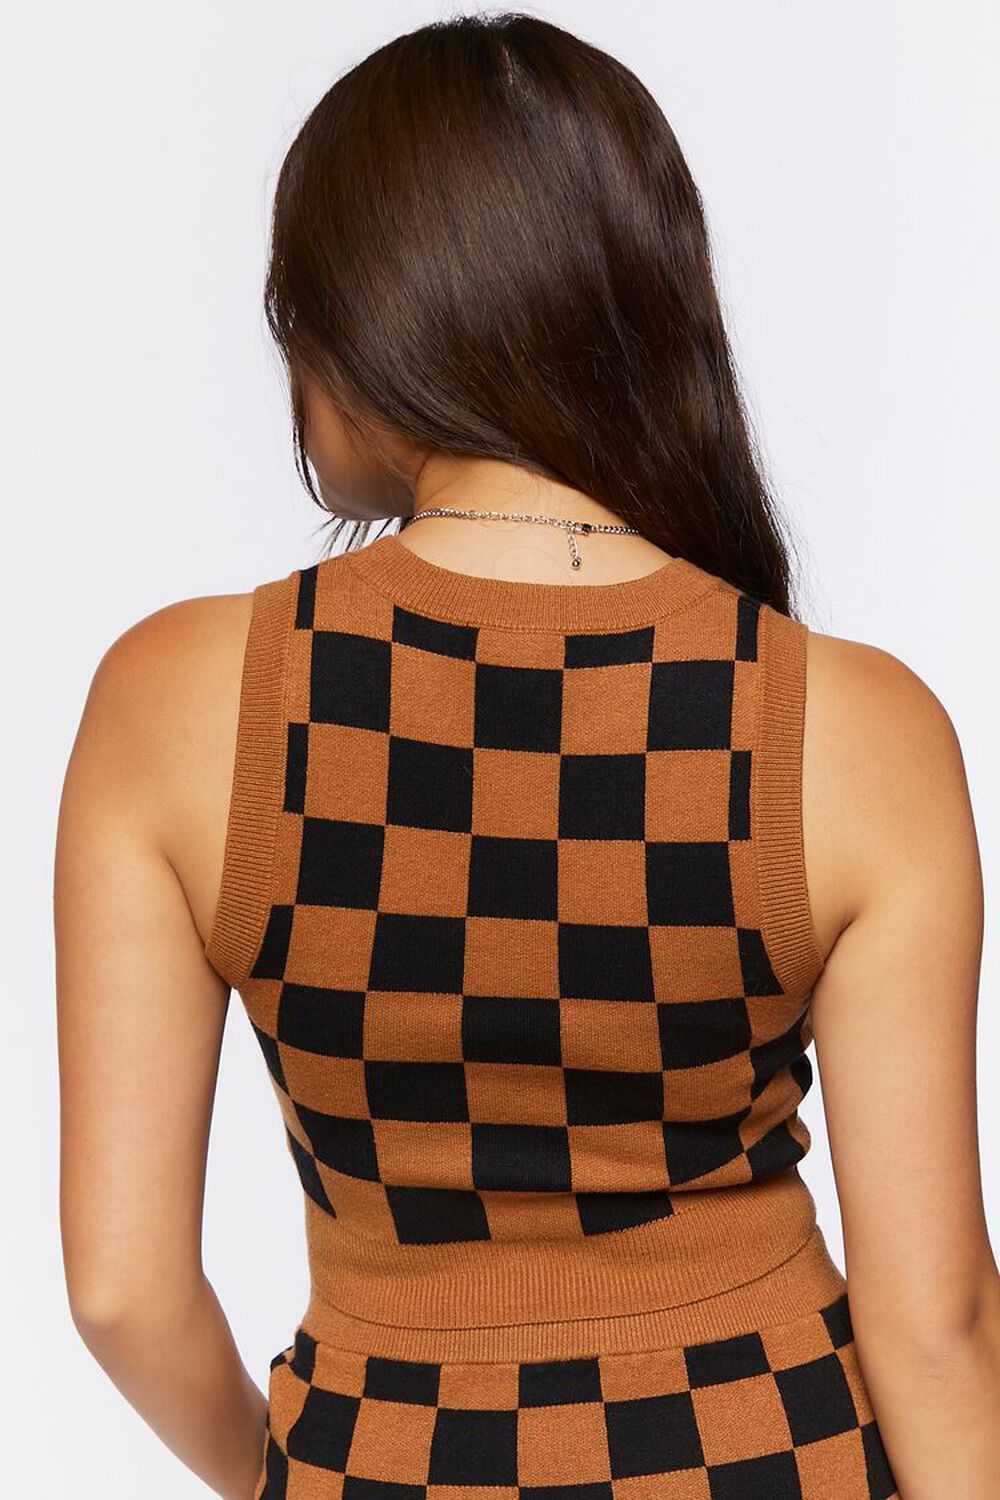 MAPLE/BLACK Checkered Sweater Vest, image 3